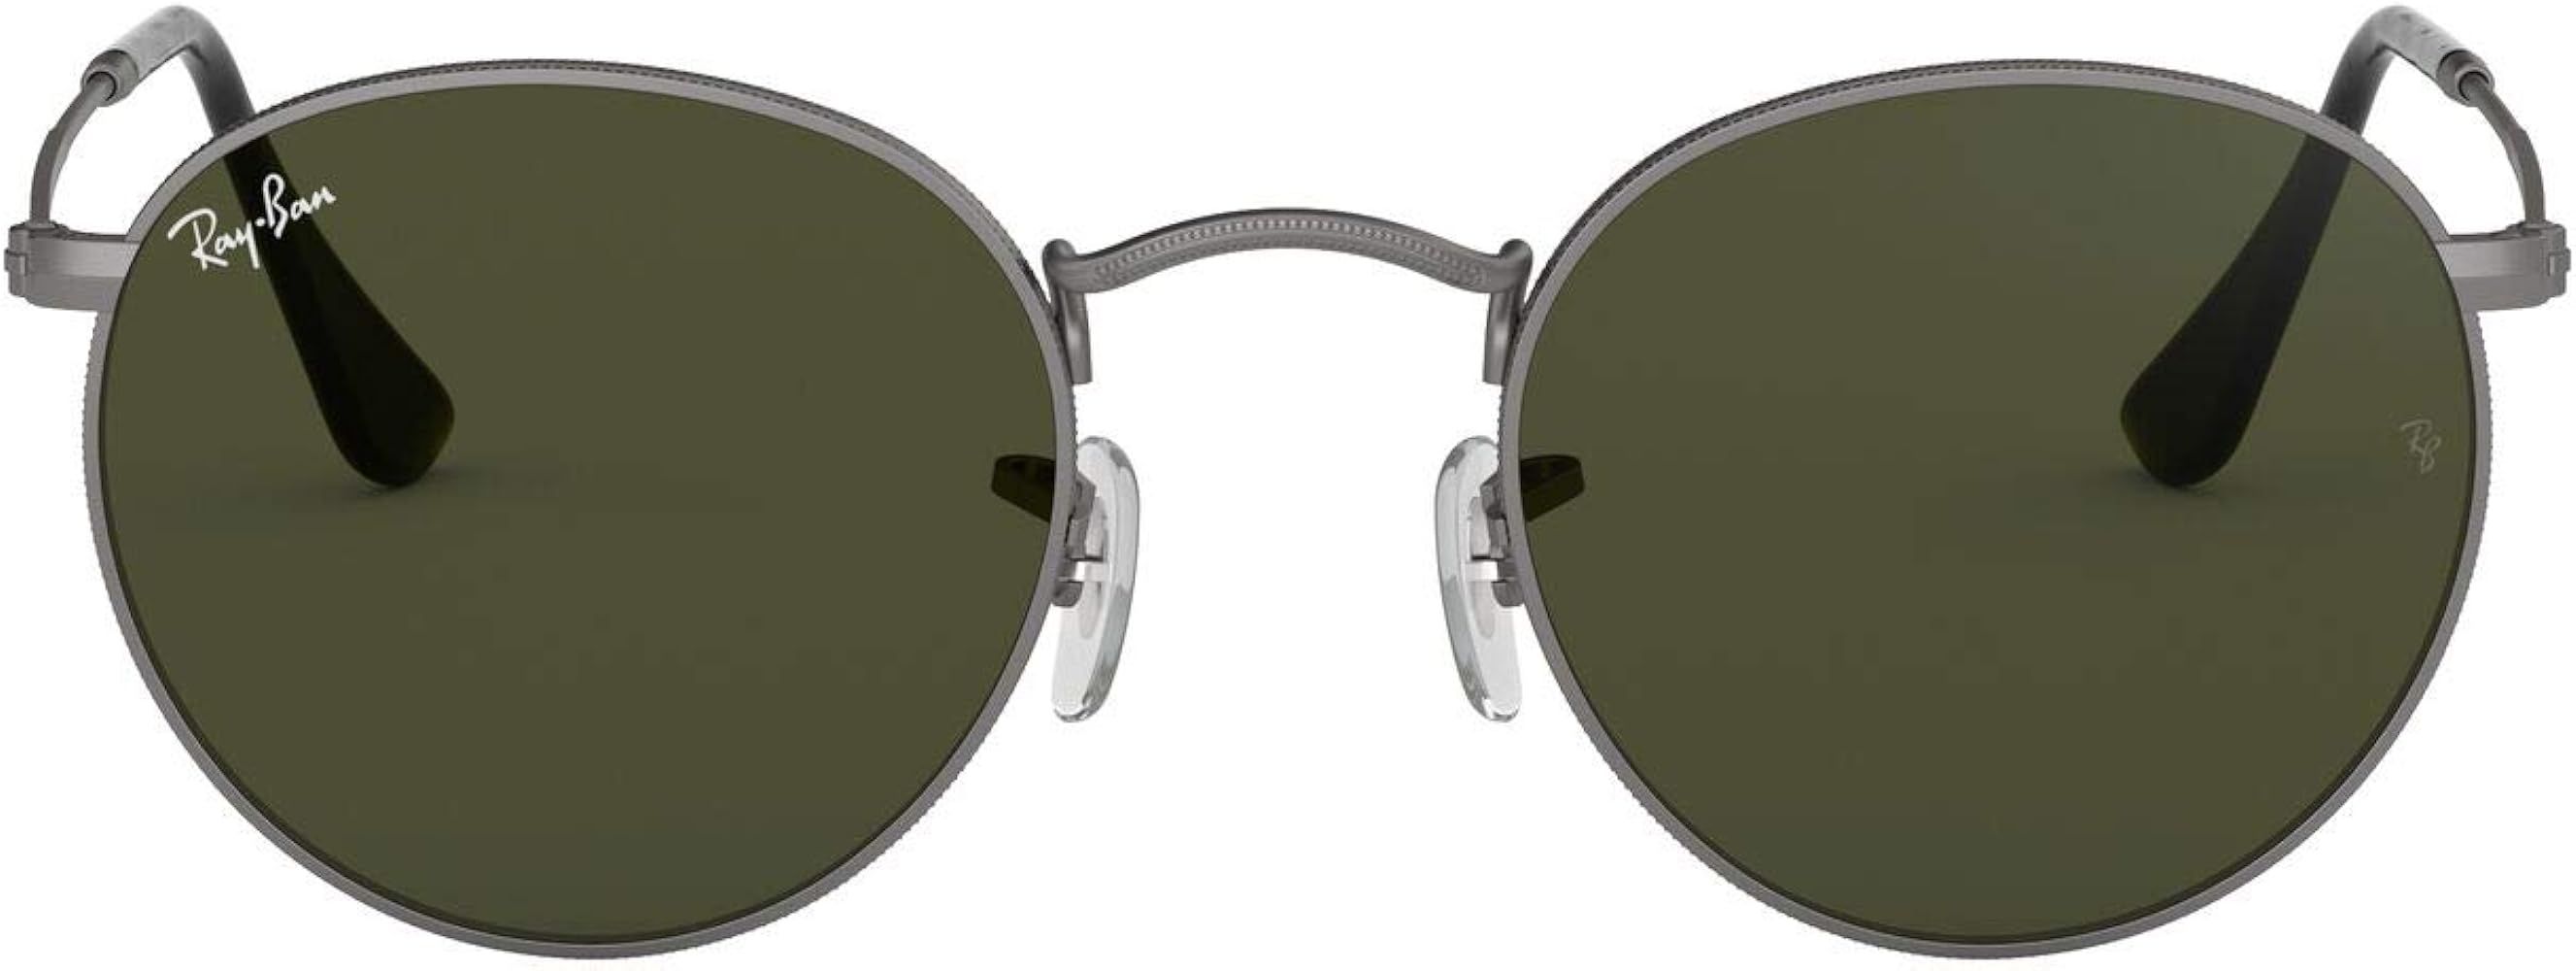 Ray-Ban Metal Sunglasses RB3447 Unisex-Adult Sunglasses | Amazon (US)